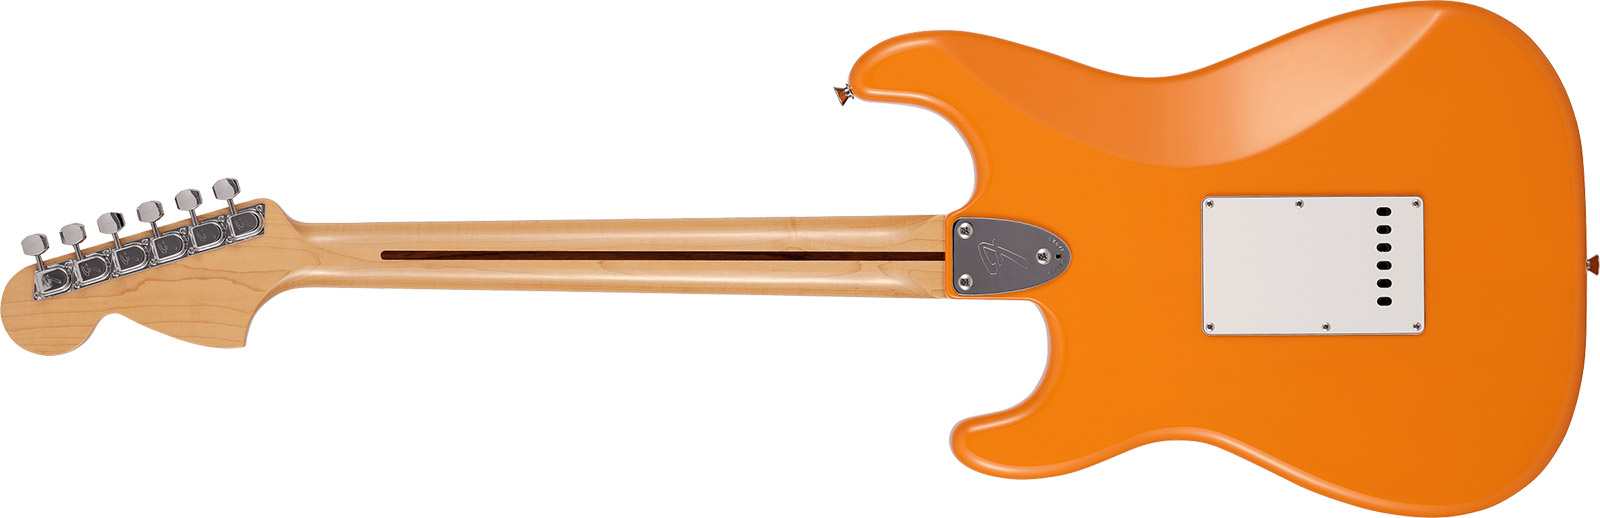 Fender Strat International Color Ltd Jap 3s Trem Rw - Capri Orange - Guitarra eléctrica con forma de str. - Variation 1